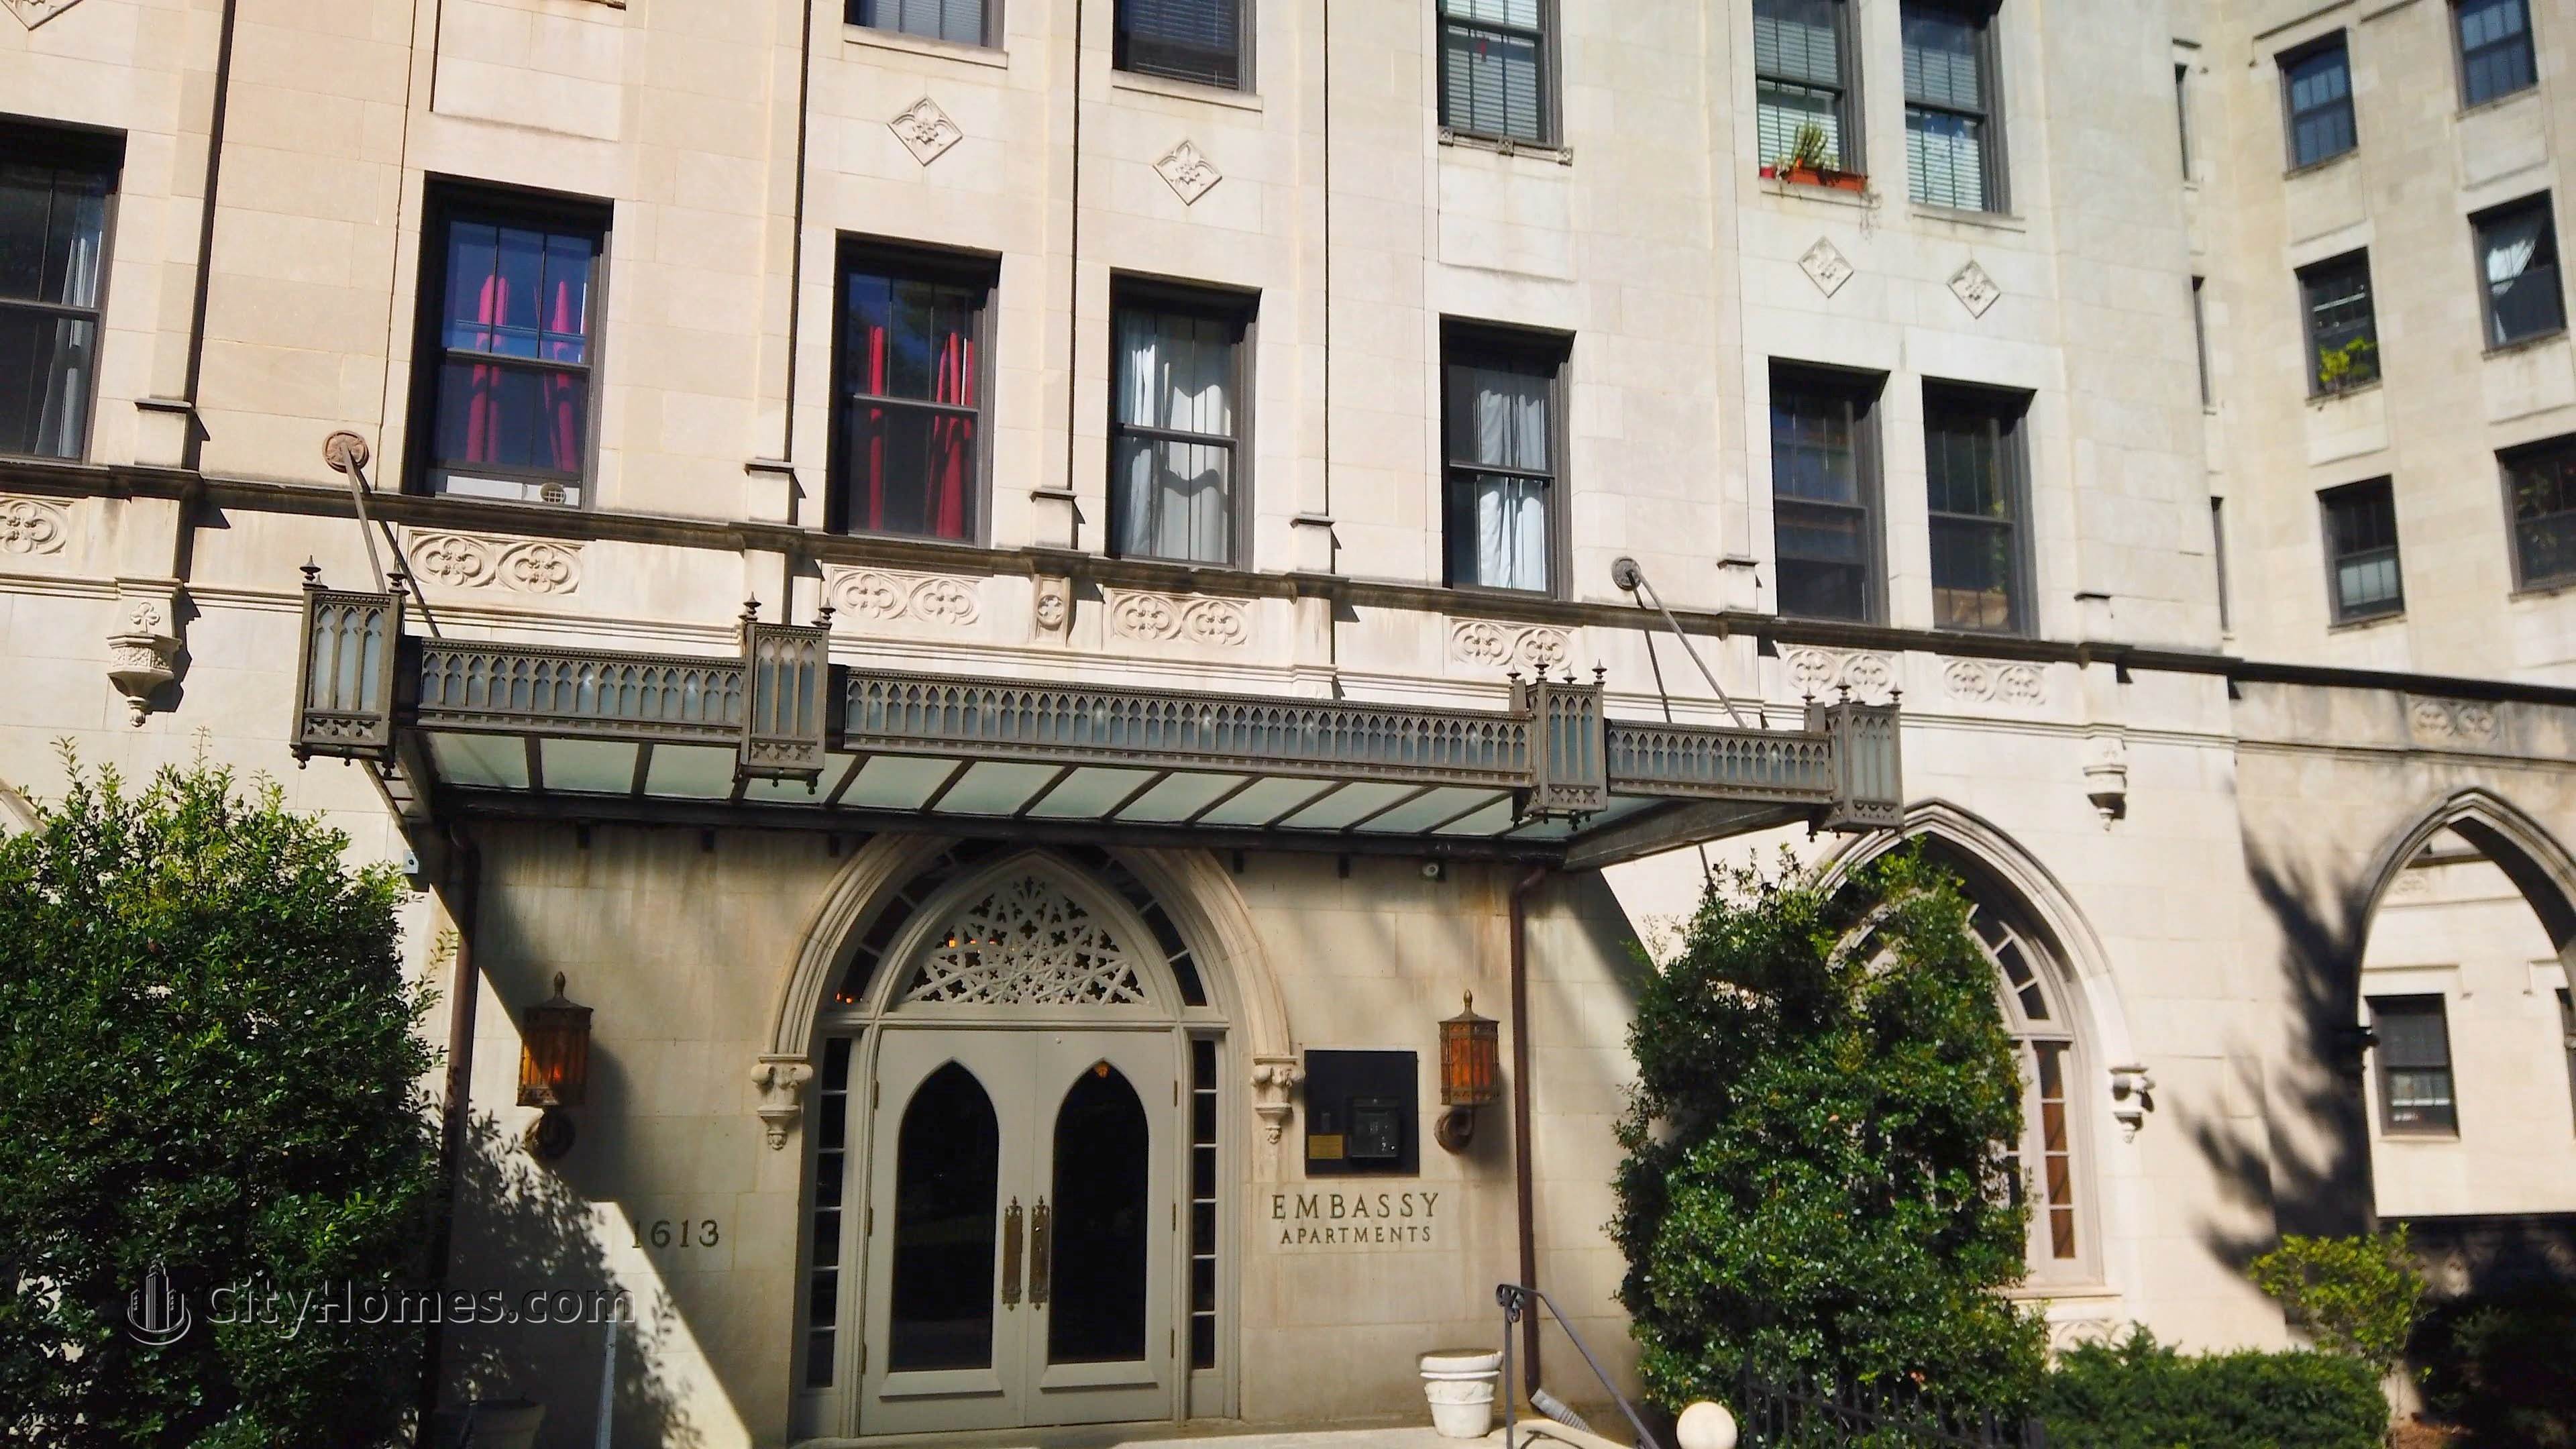 The Embassy建于 1613 Harvard St NW, Mount Pleasant, 华盛顿市, DC 20009